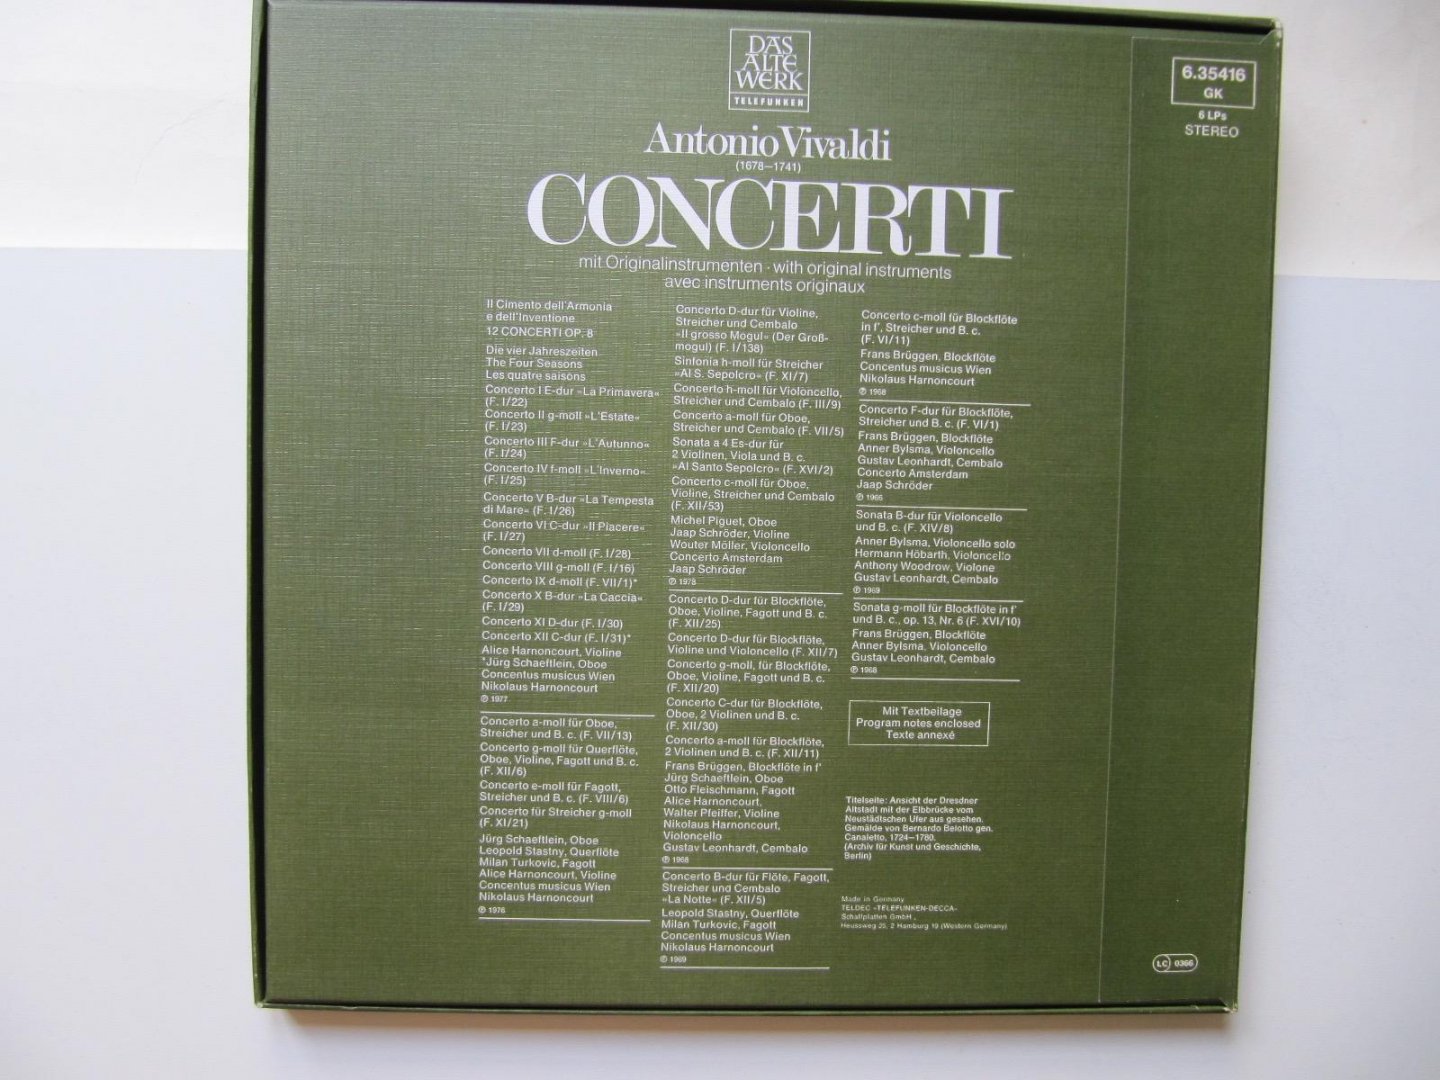 Antonio Vivaldi - Antonio Vivaldi Concerti with original instruments